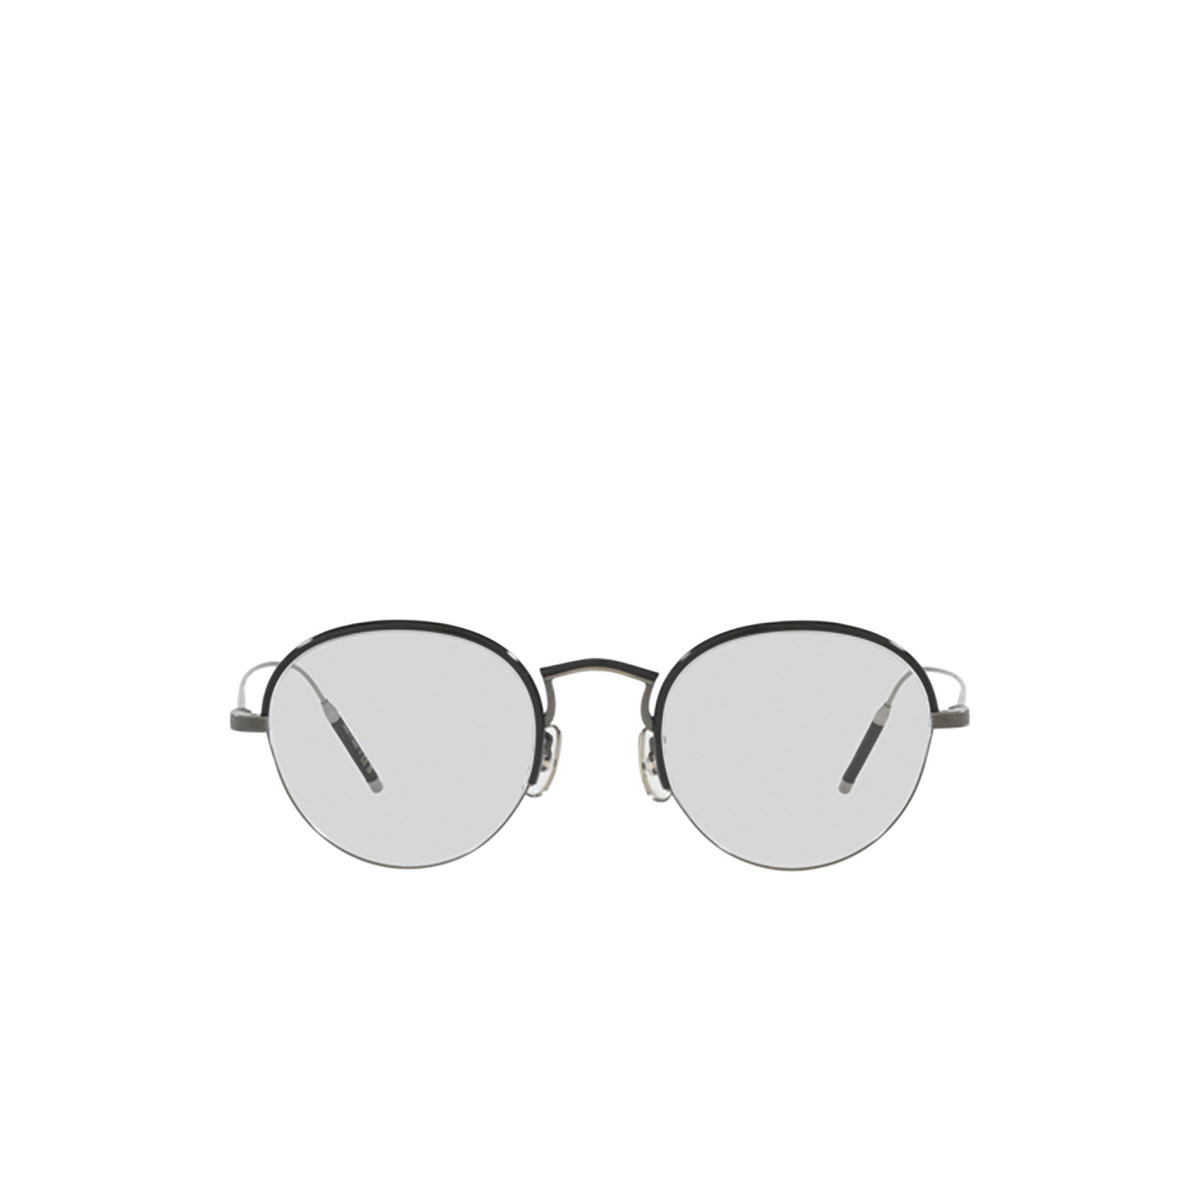 Oliver Peoples TK-6 Eyeglasses 5076 Grey - front view